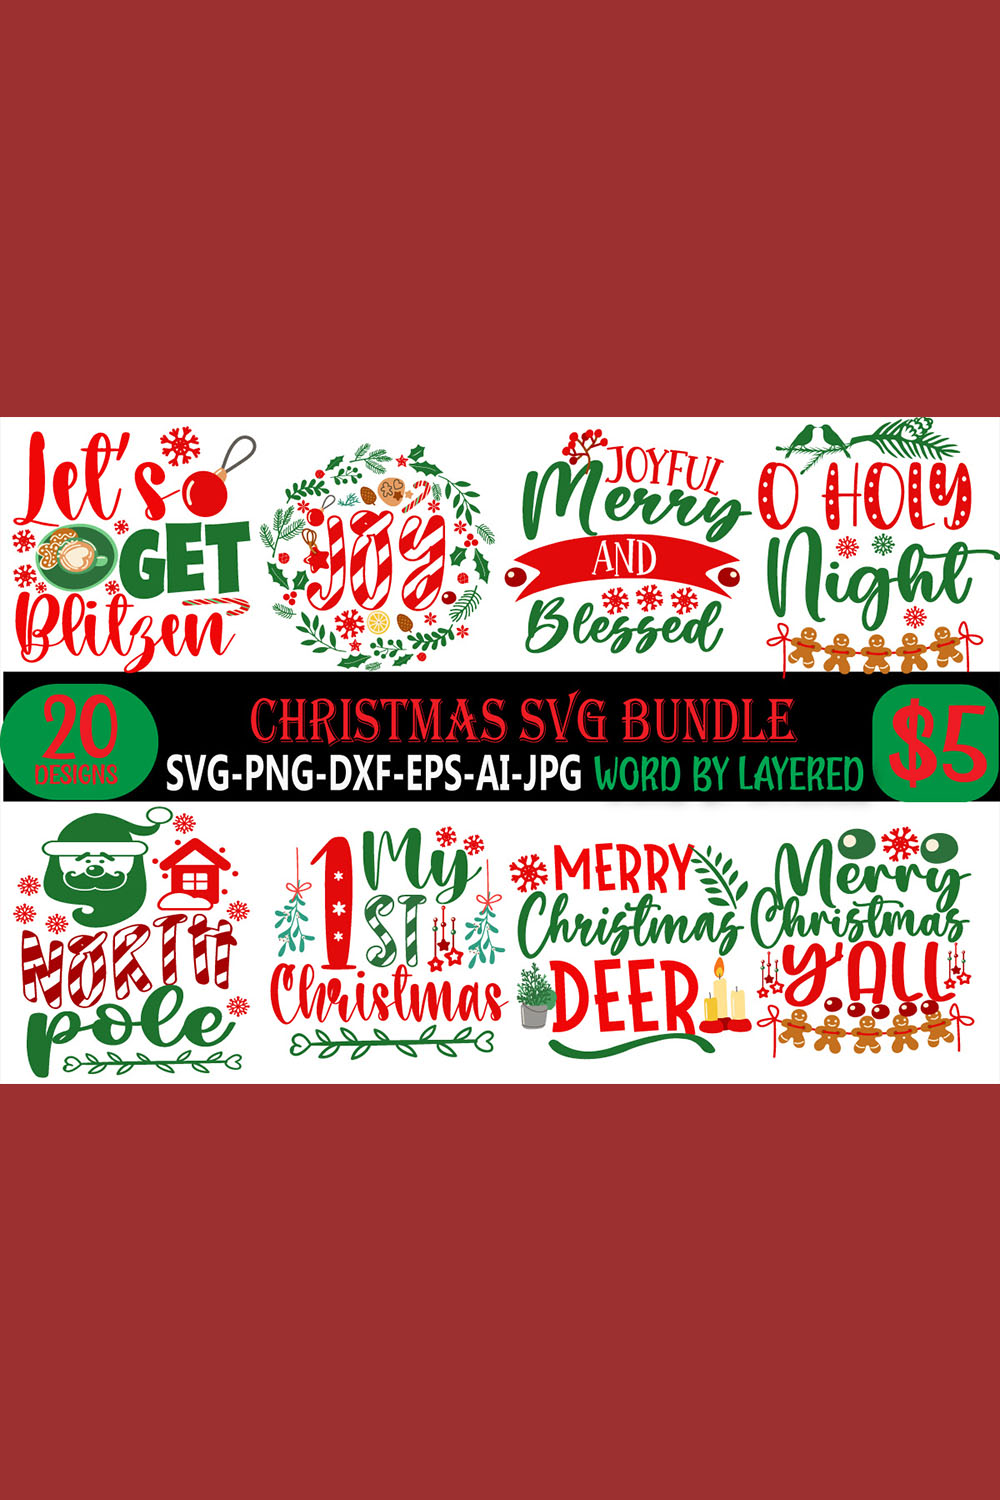 Different Christmas Quotes SVG Bundle pinterest image.